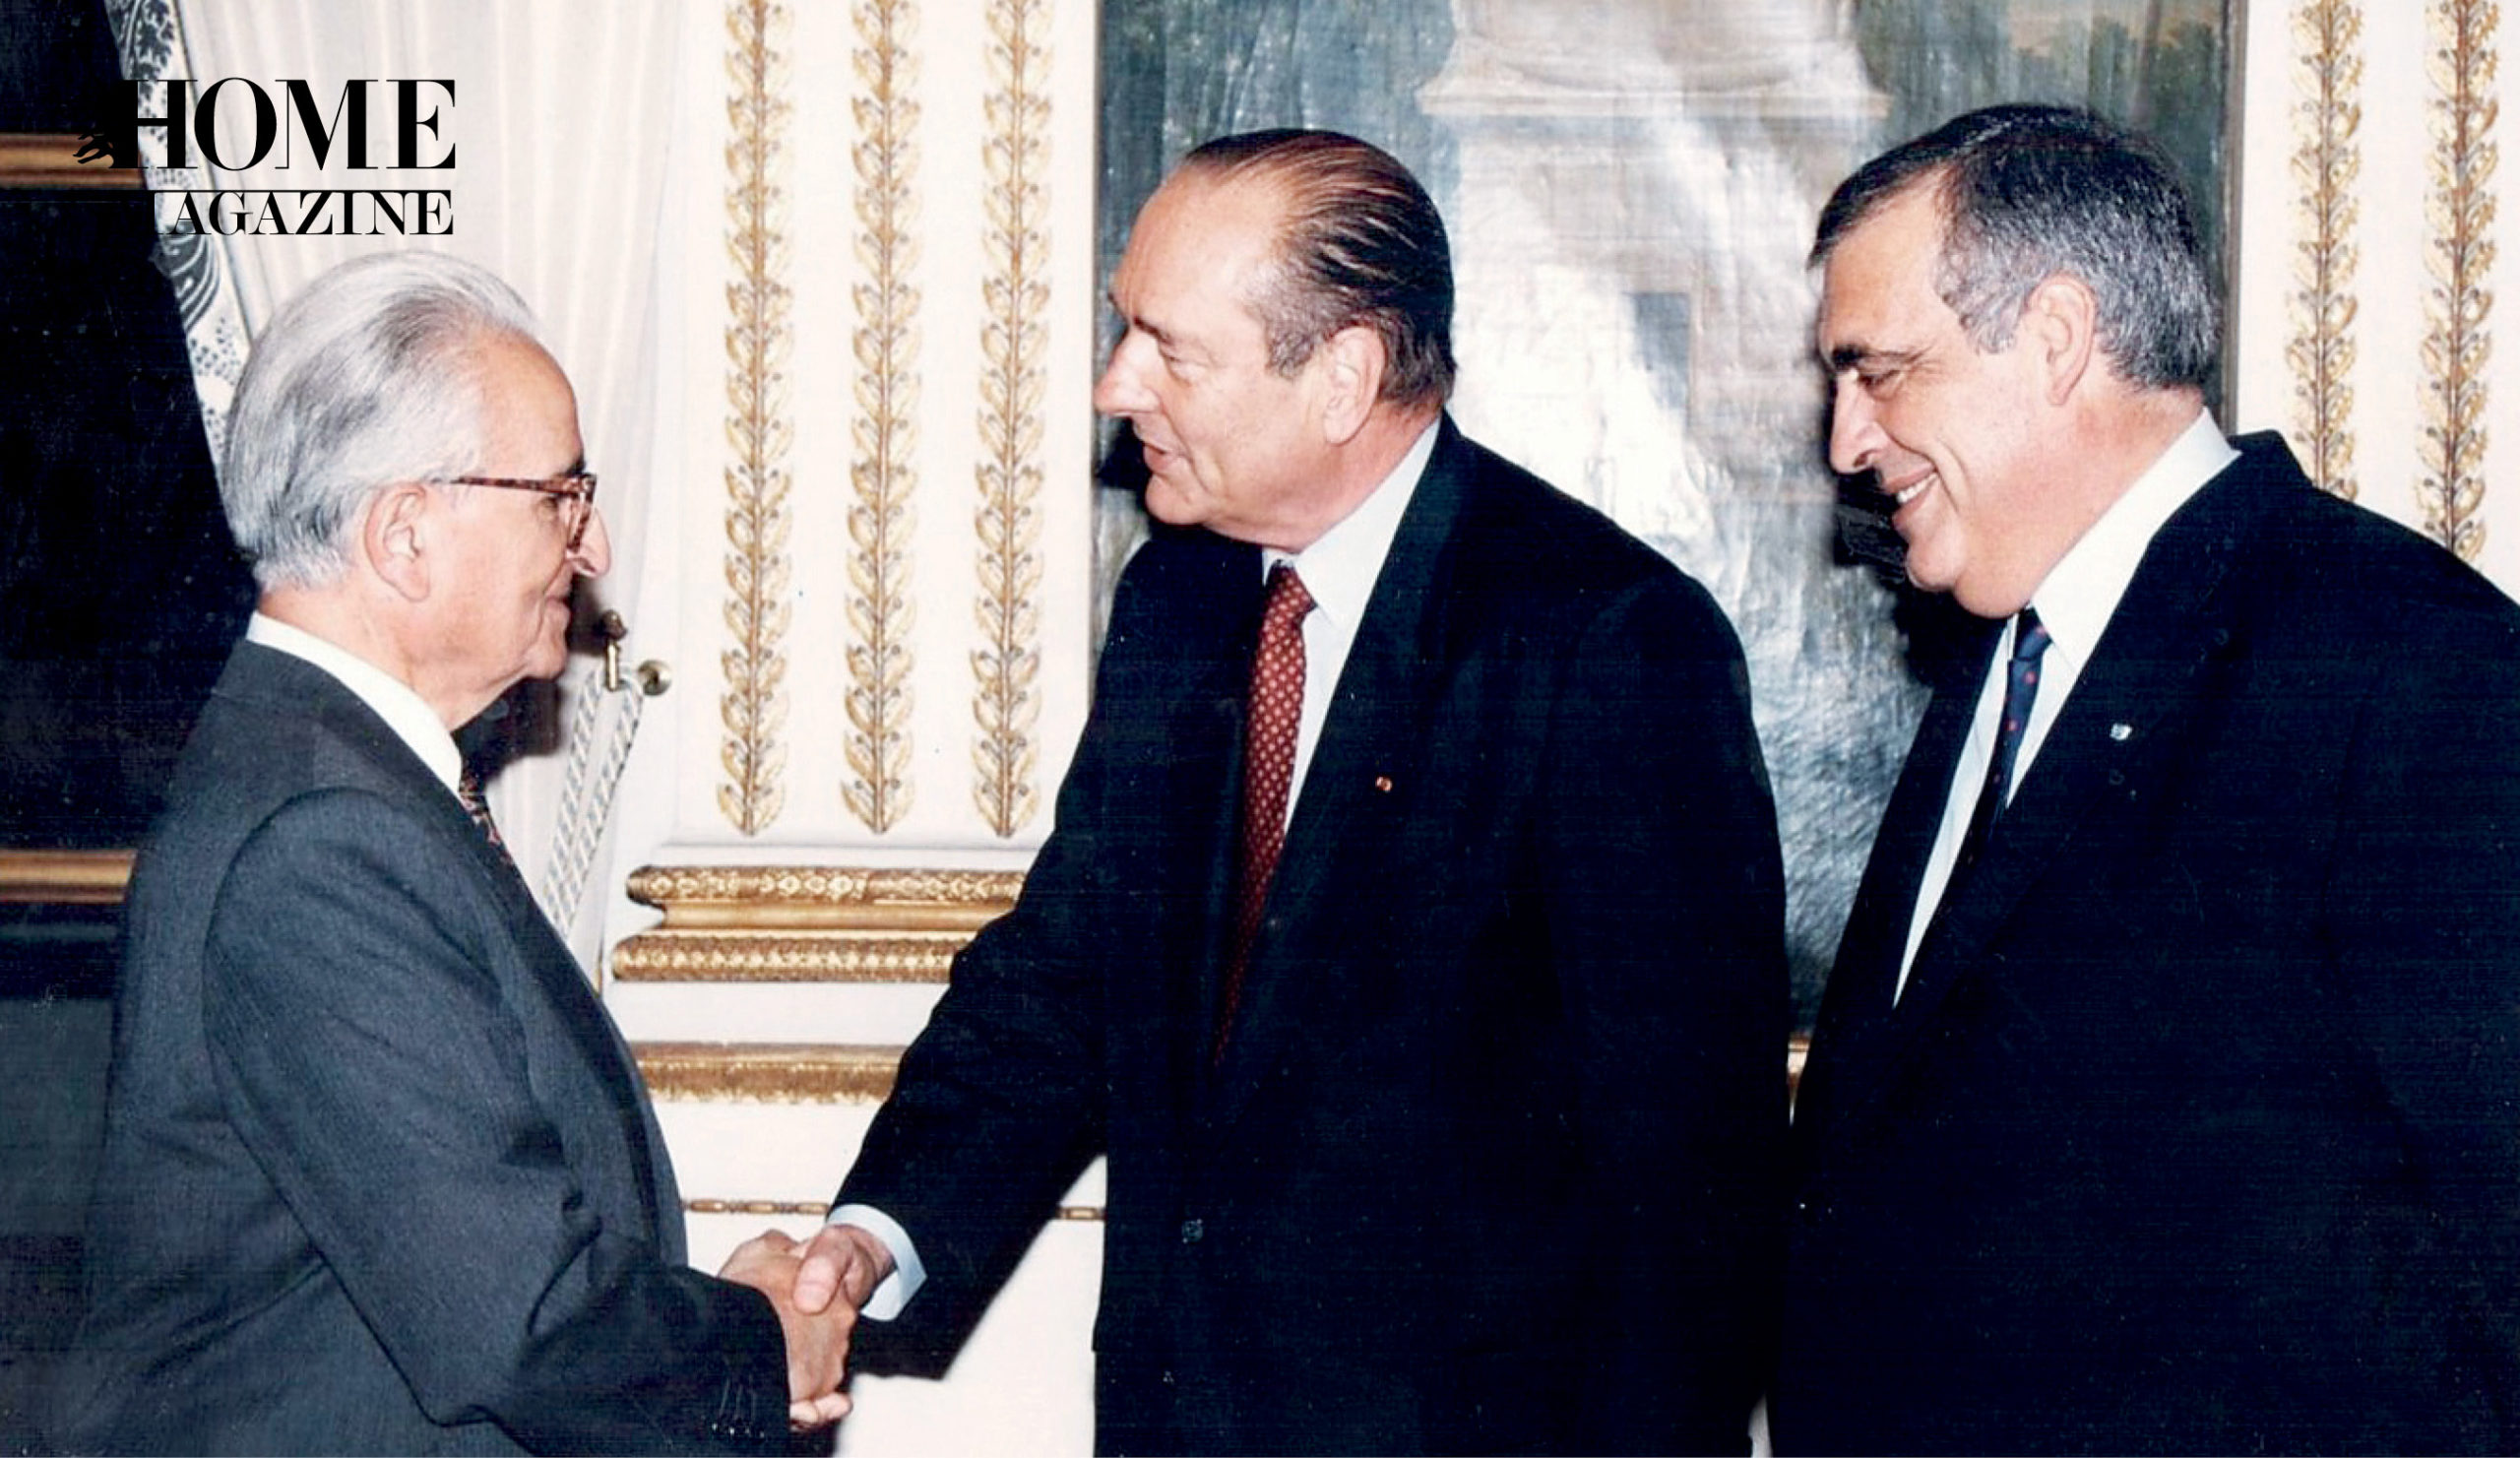 Three men in suits shaking hands